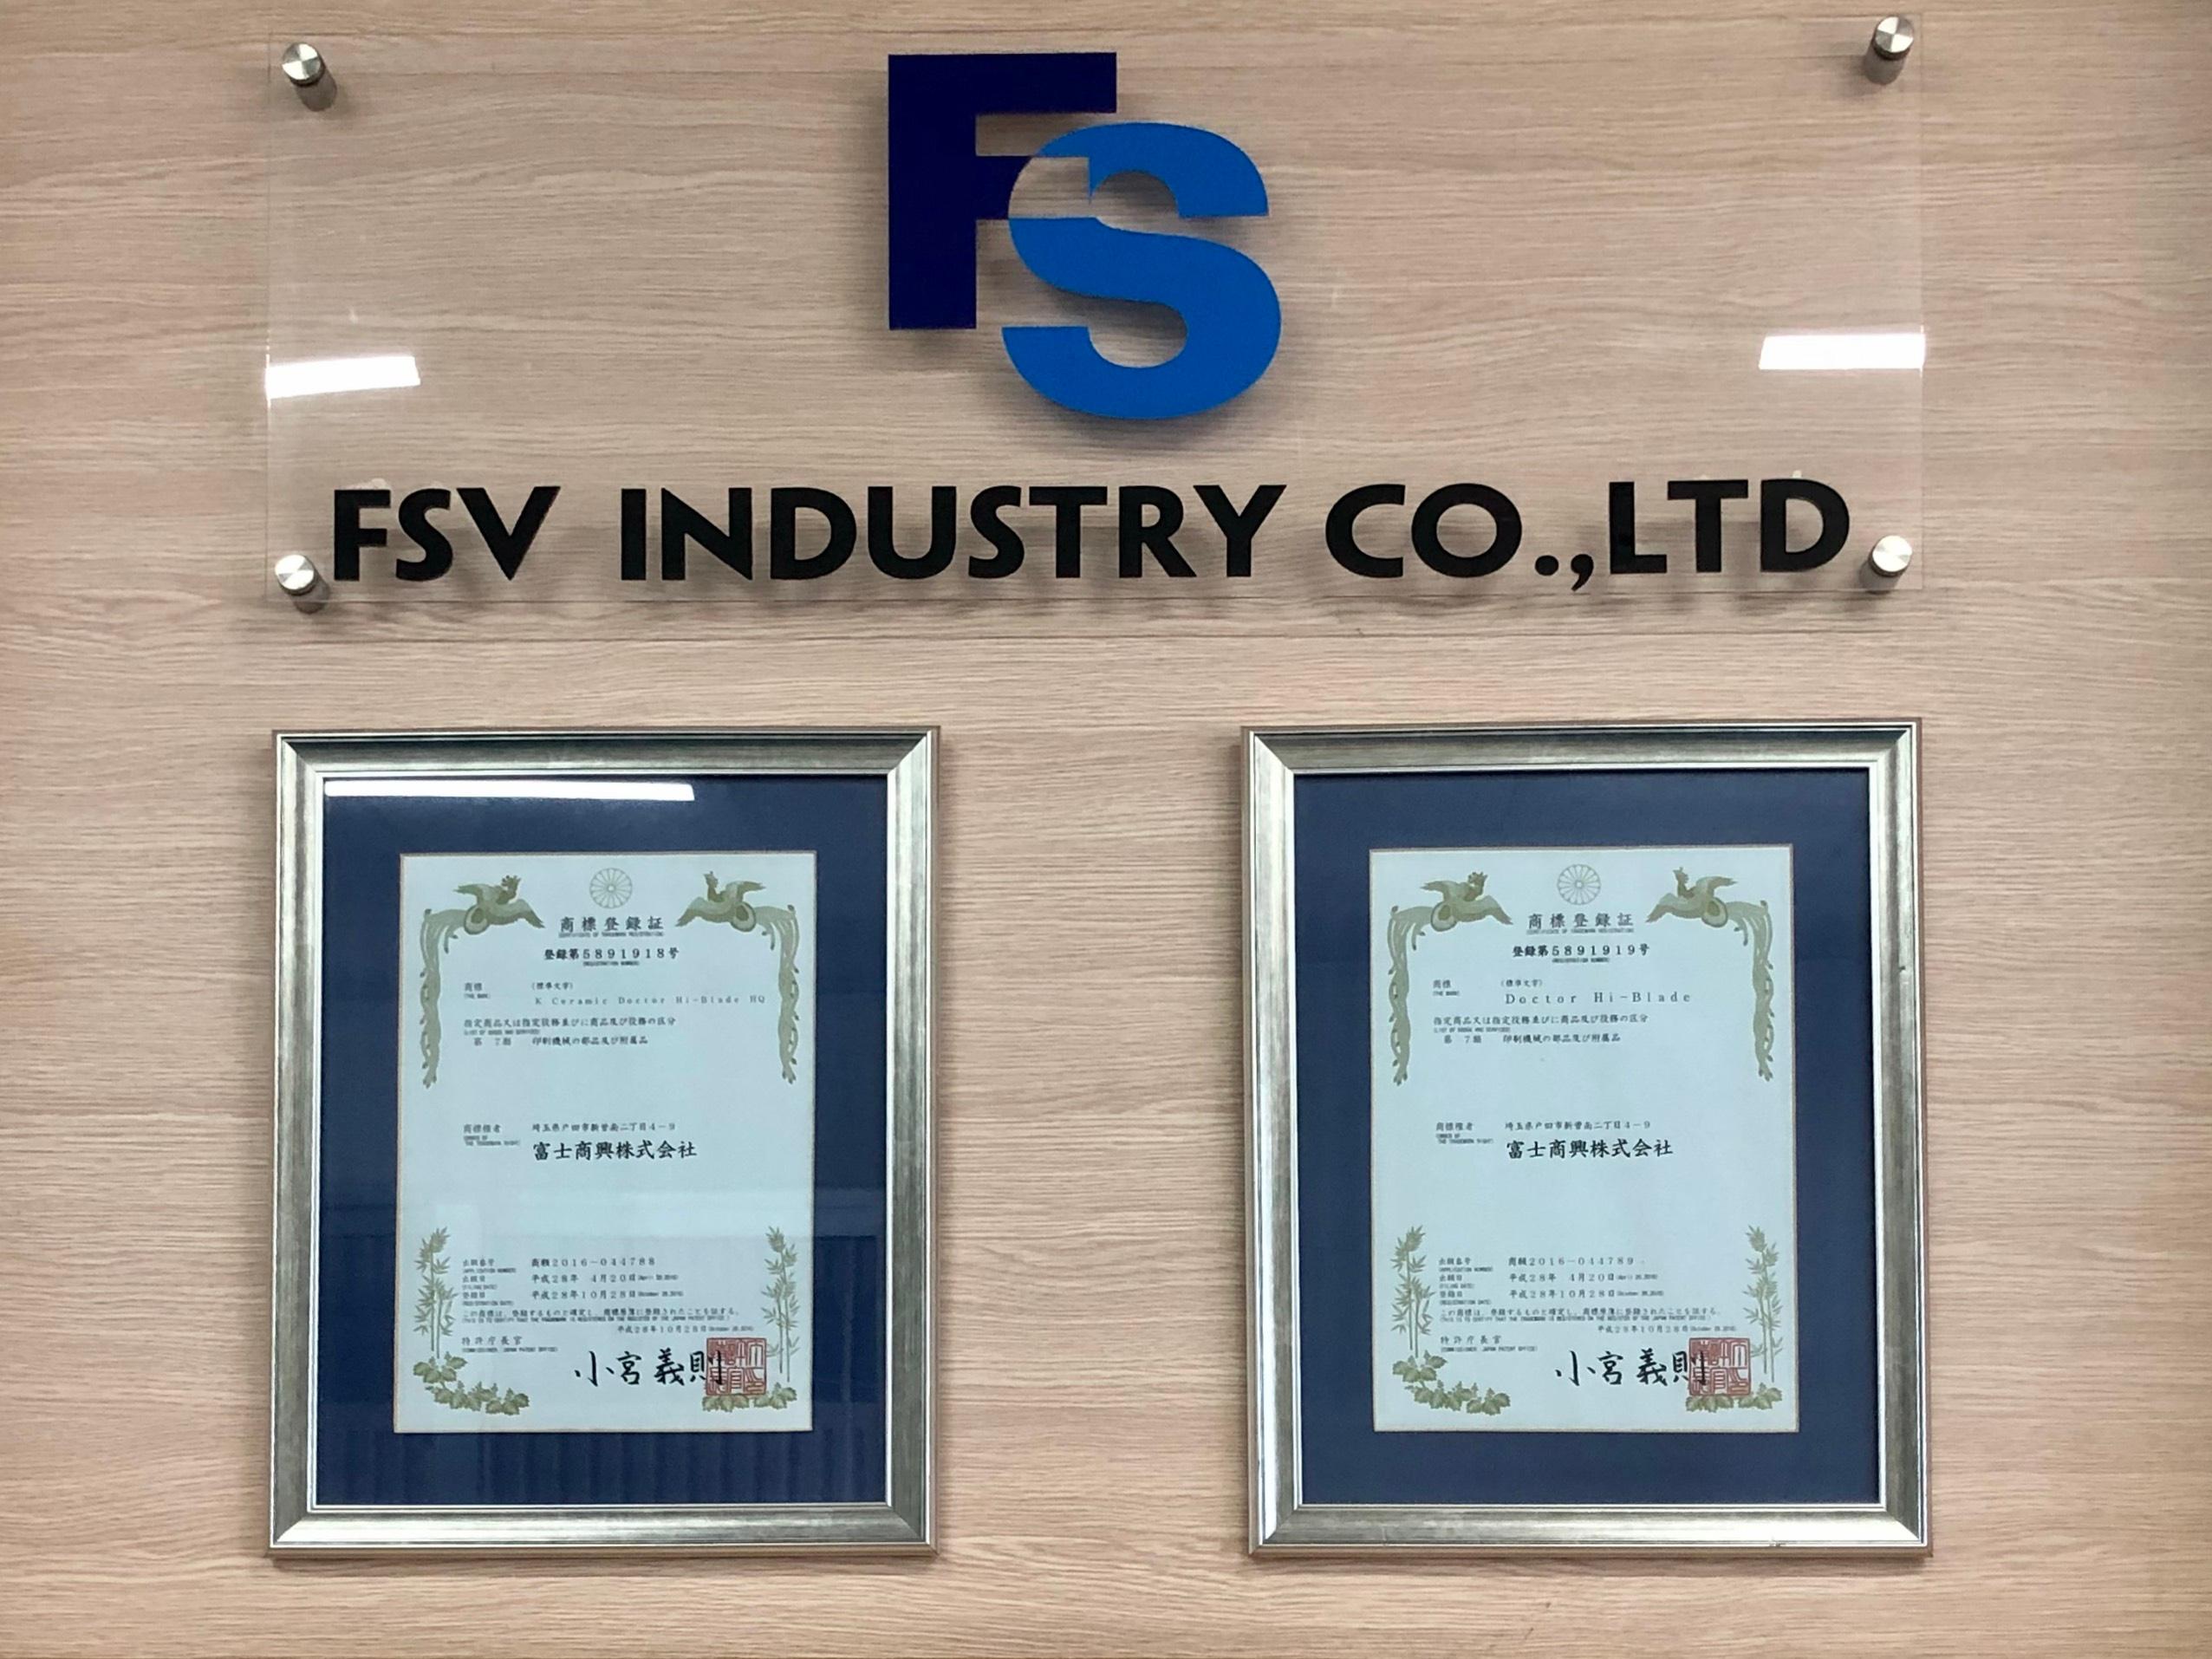 FSV Industry Co., Ltd